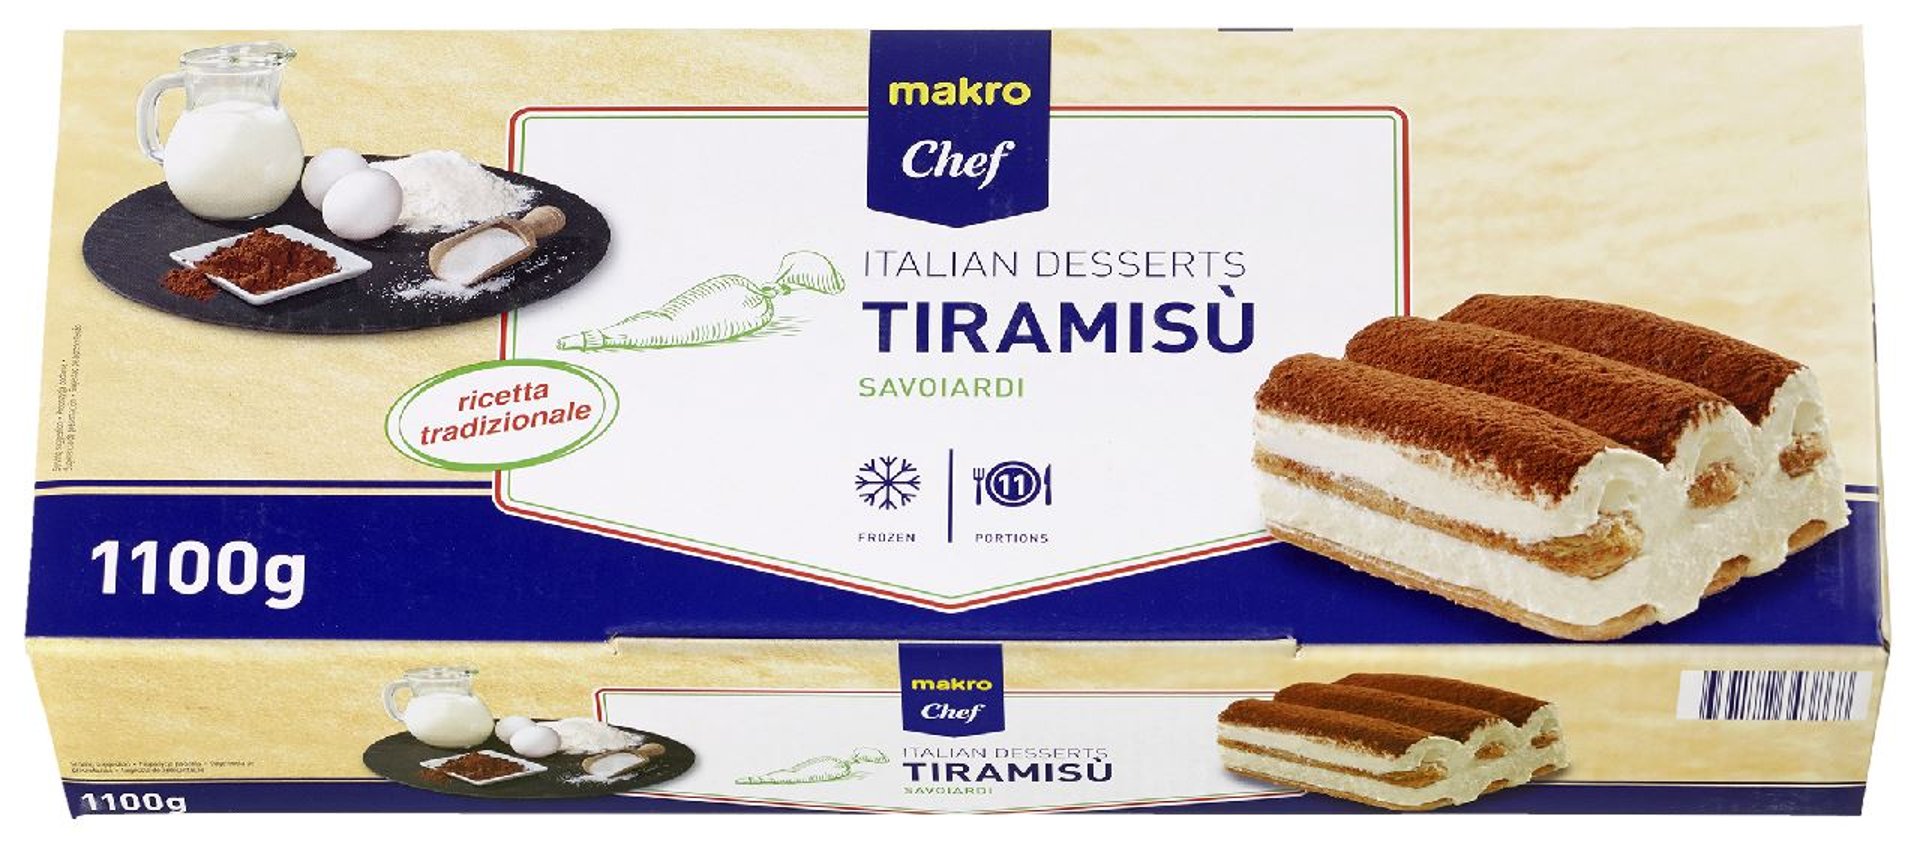 METRO Chef - Tiramisu Savoiardi - 1,1 kg Box